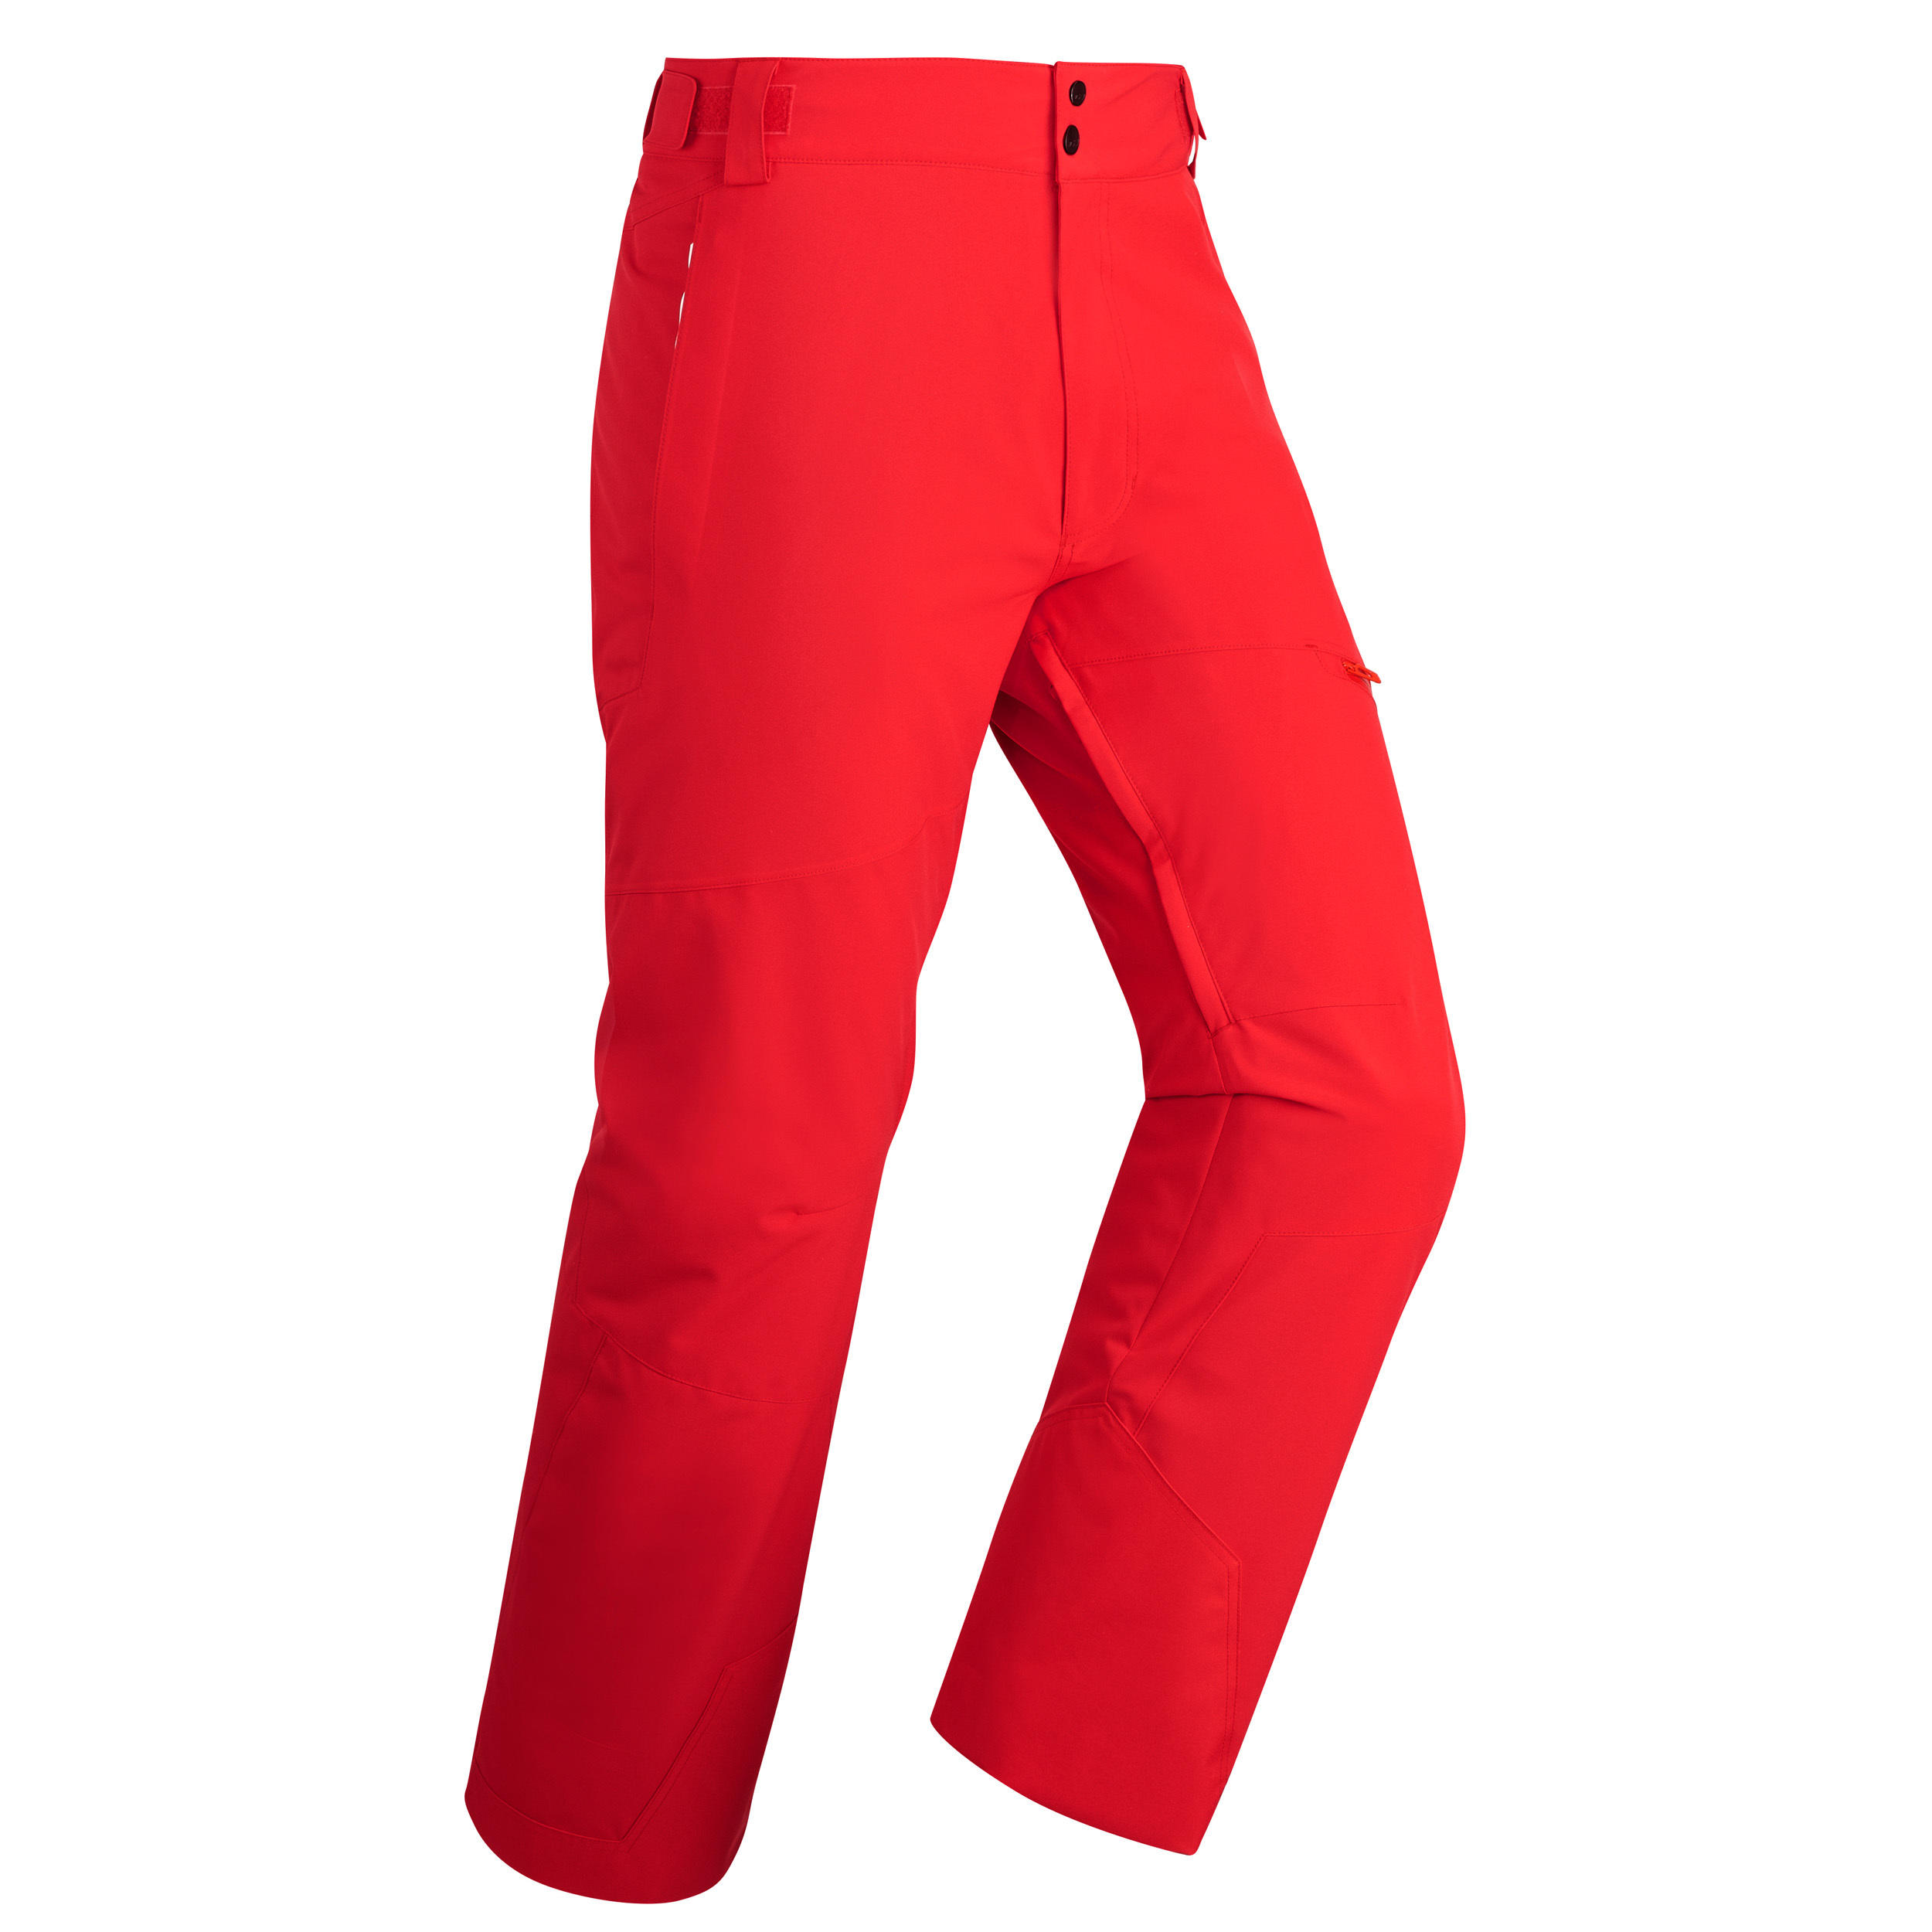 decathlon ski trousers